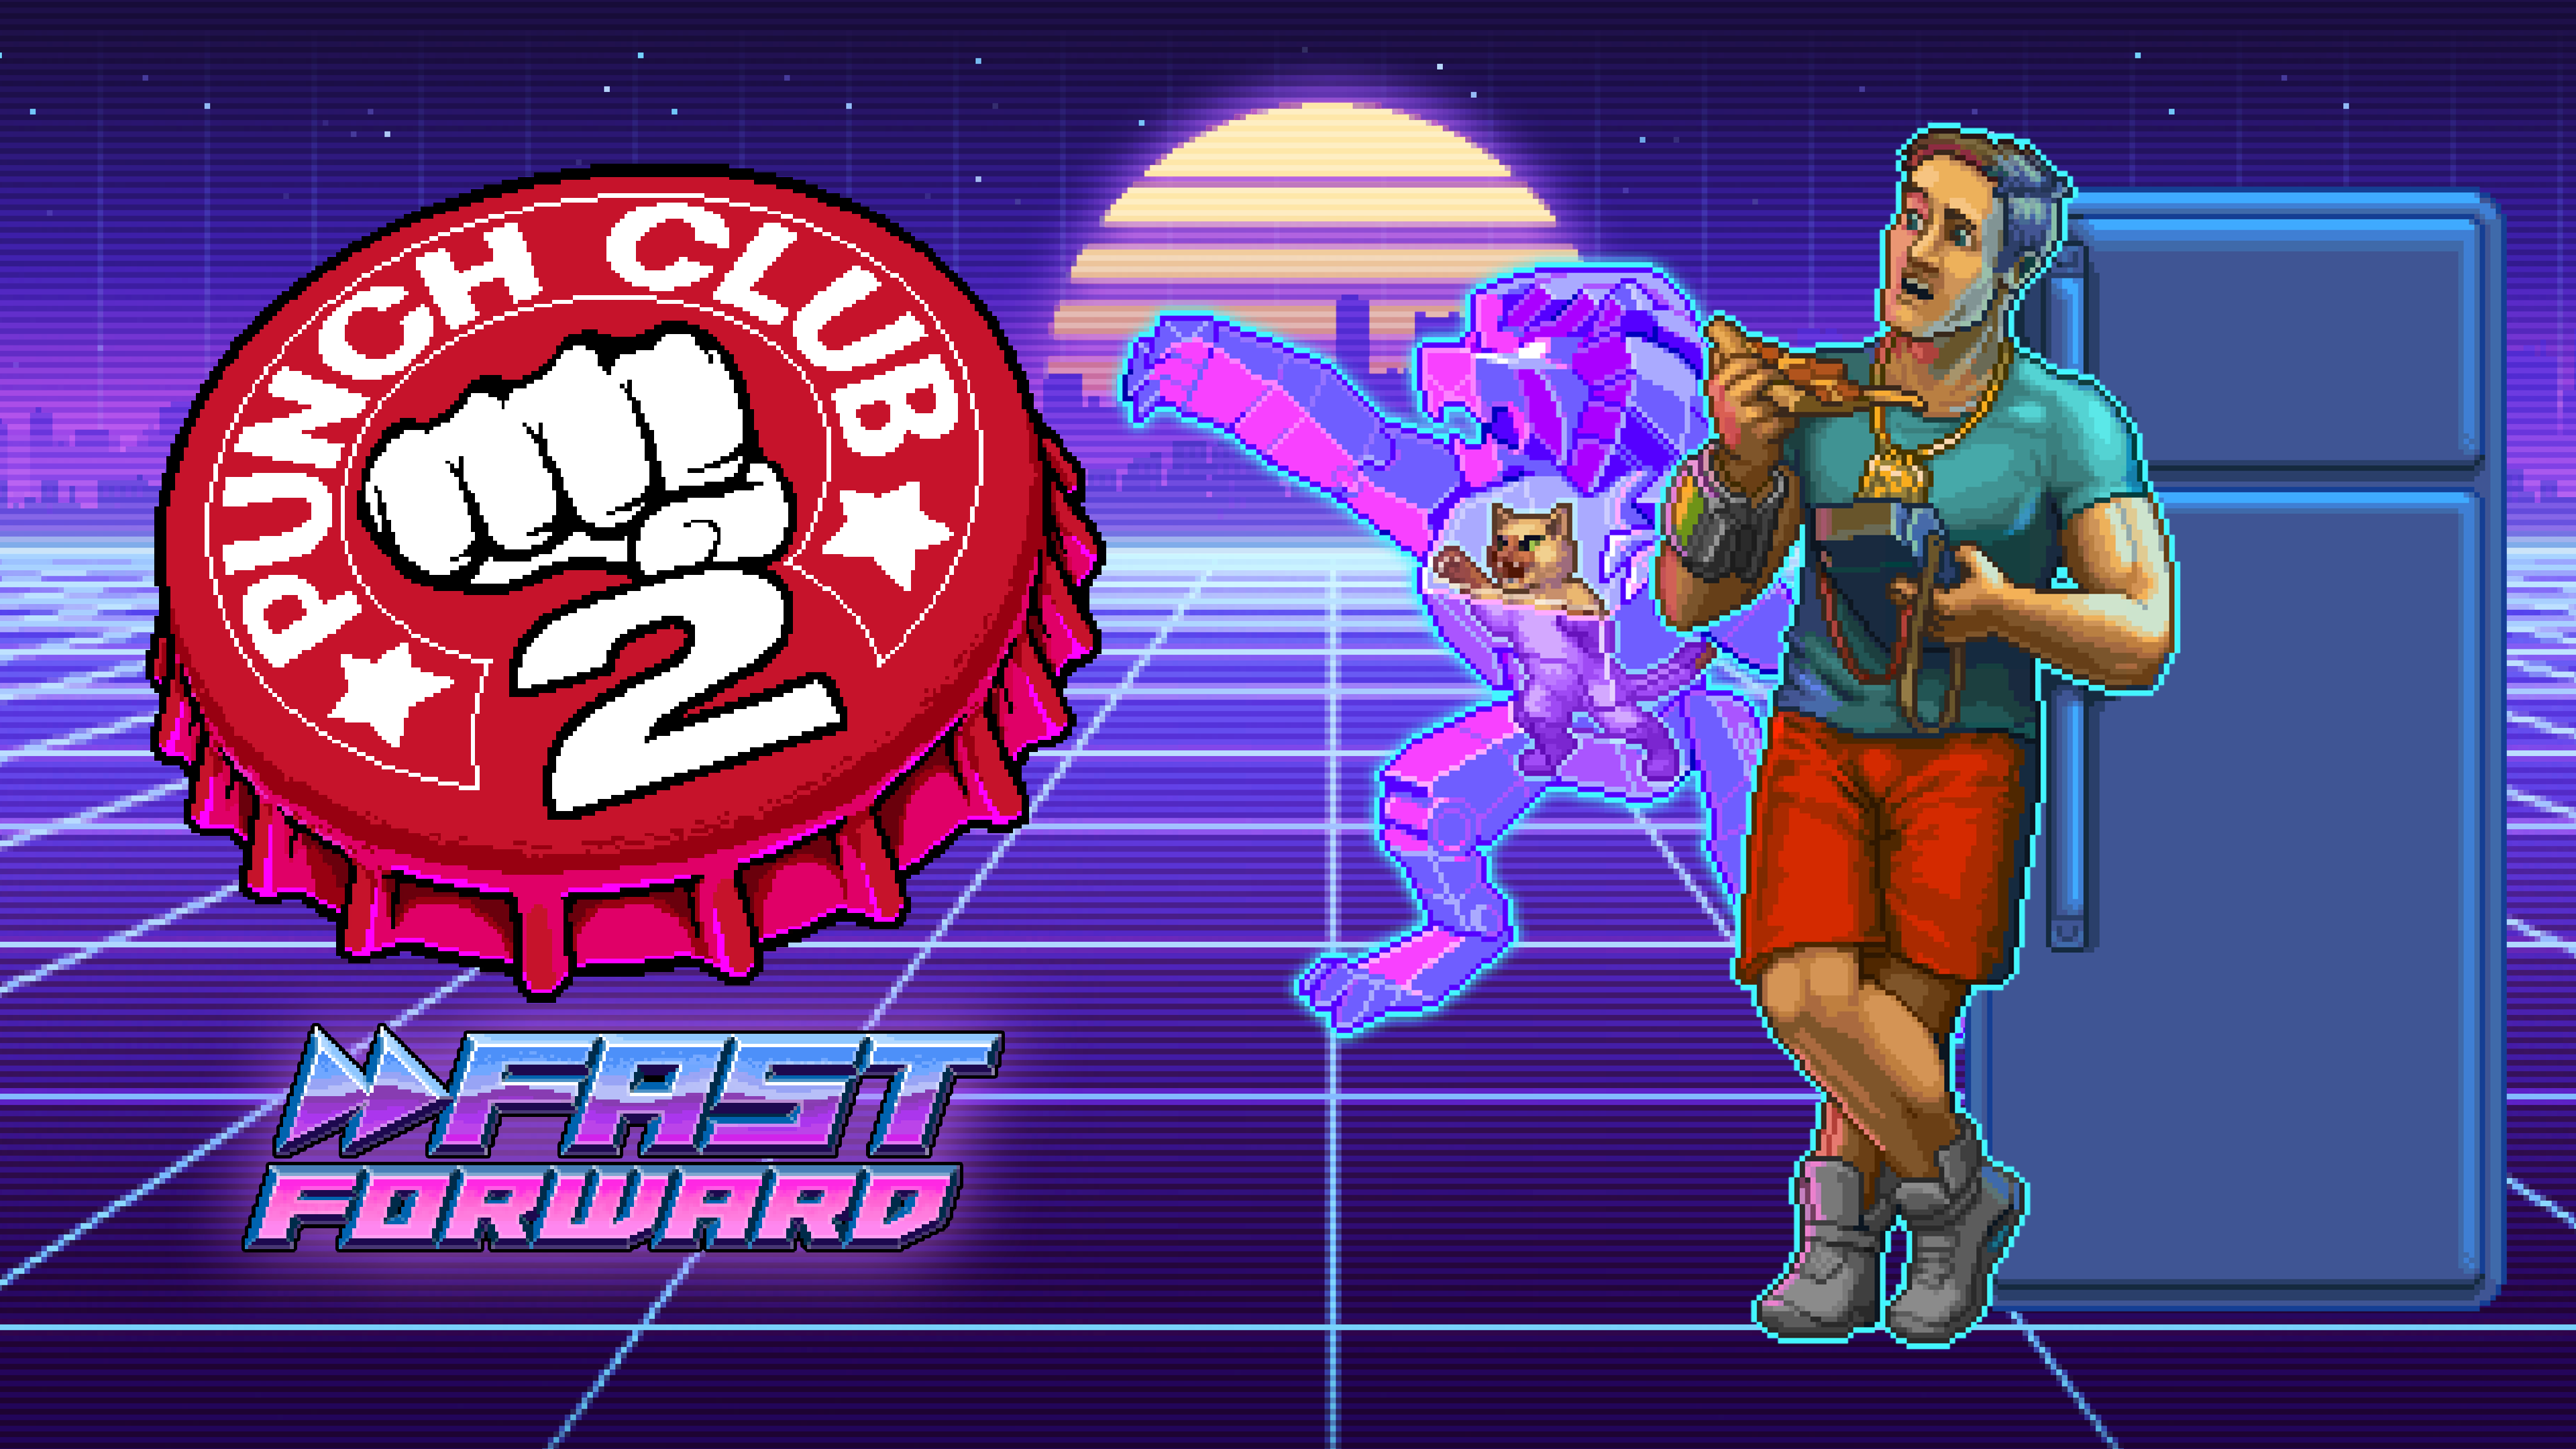 blog featureサイバーパンク都市のロッキーよ、チャンピオンになれ『Punch Club 2: Fast Forward』